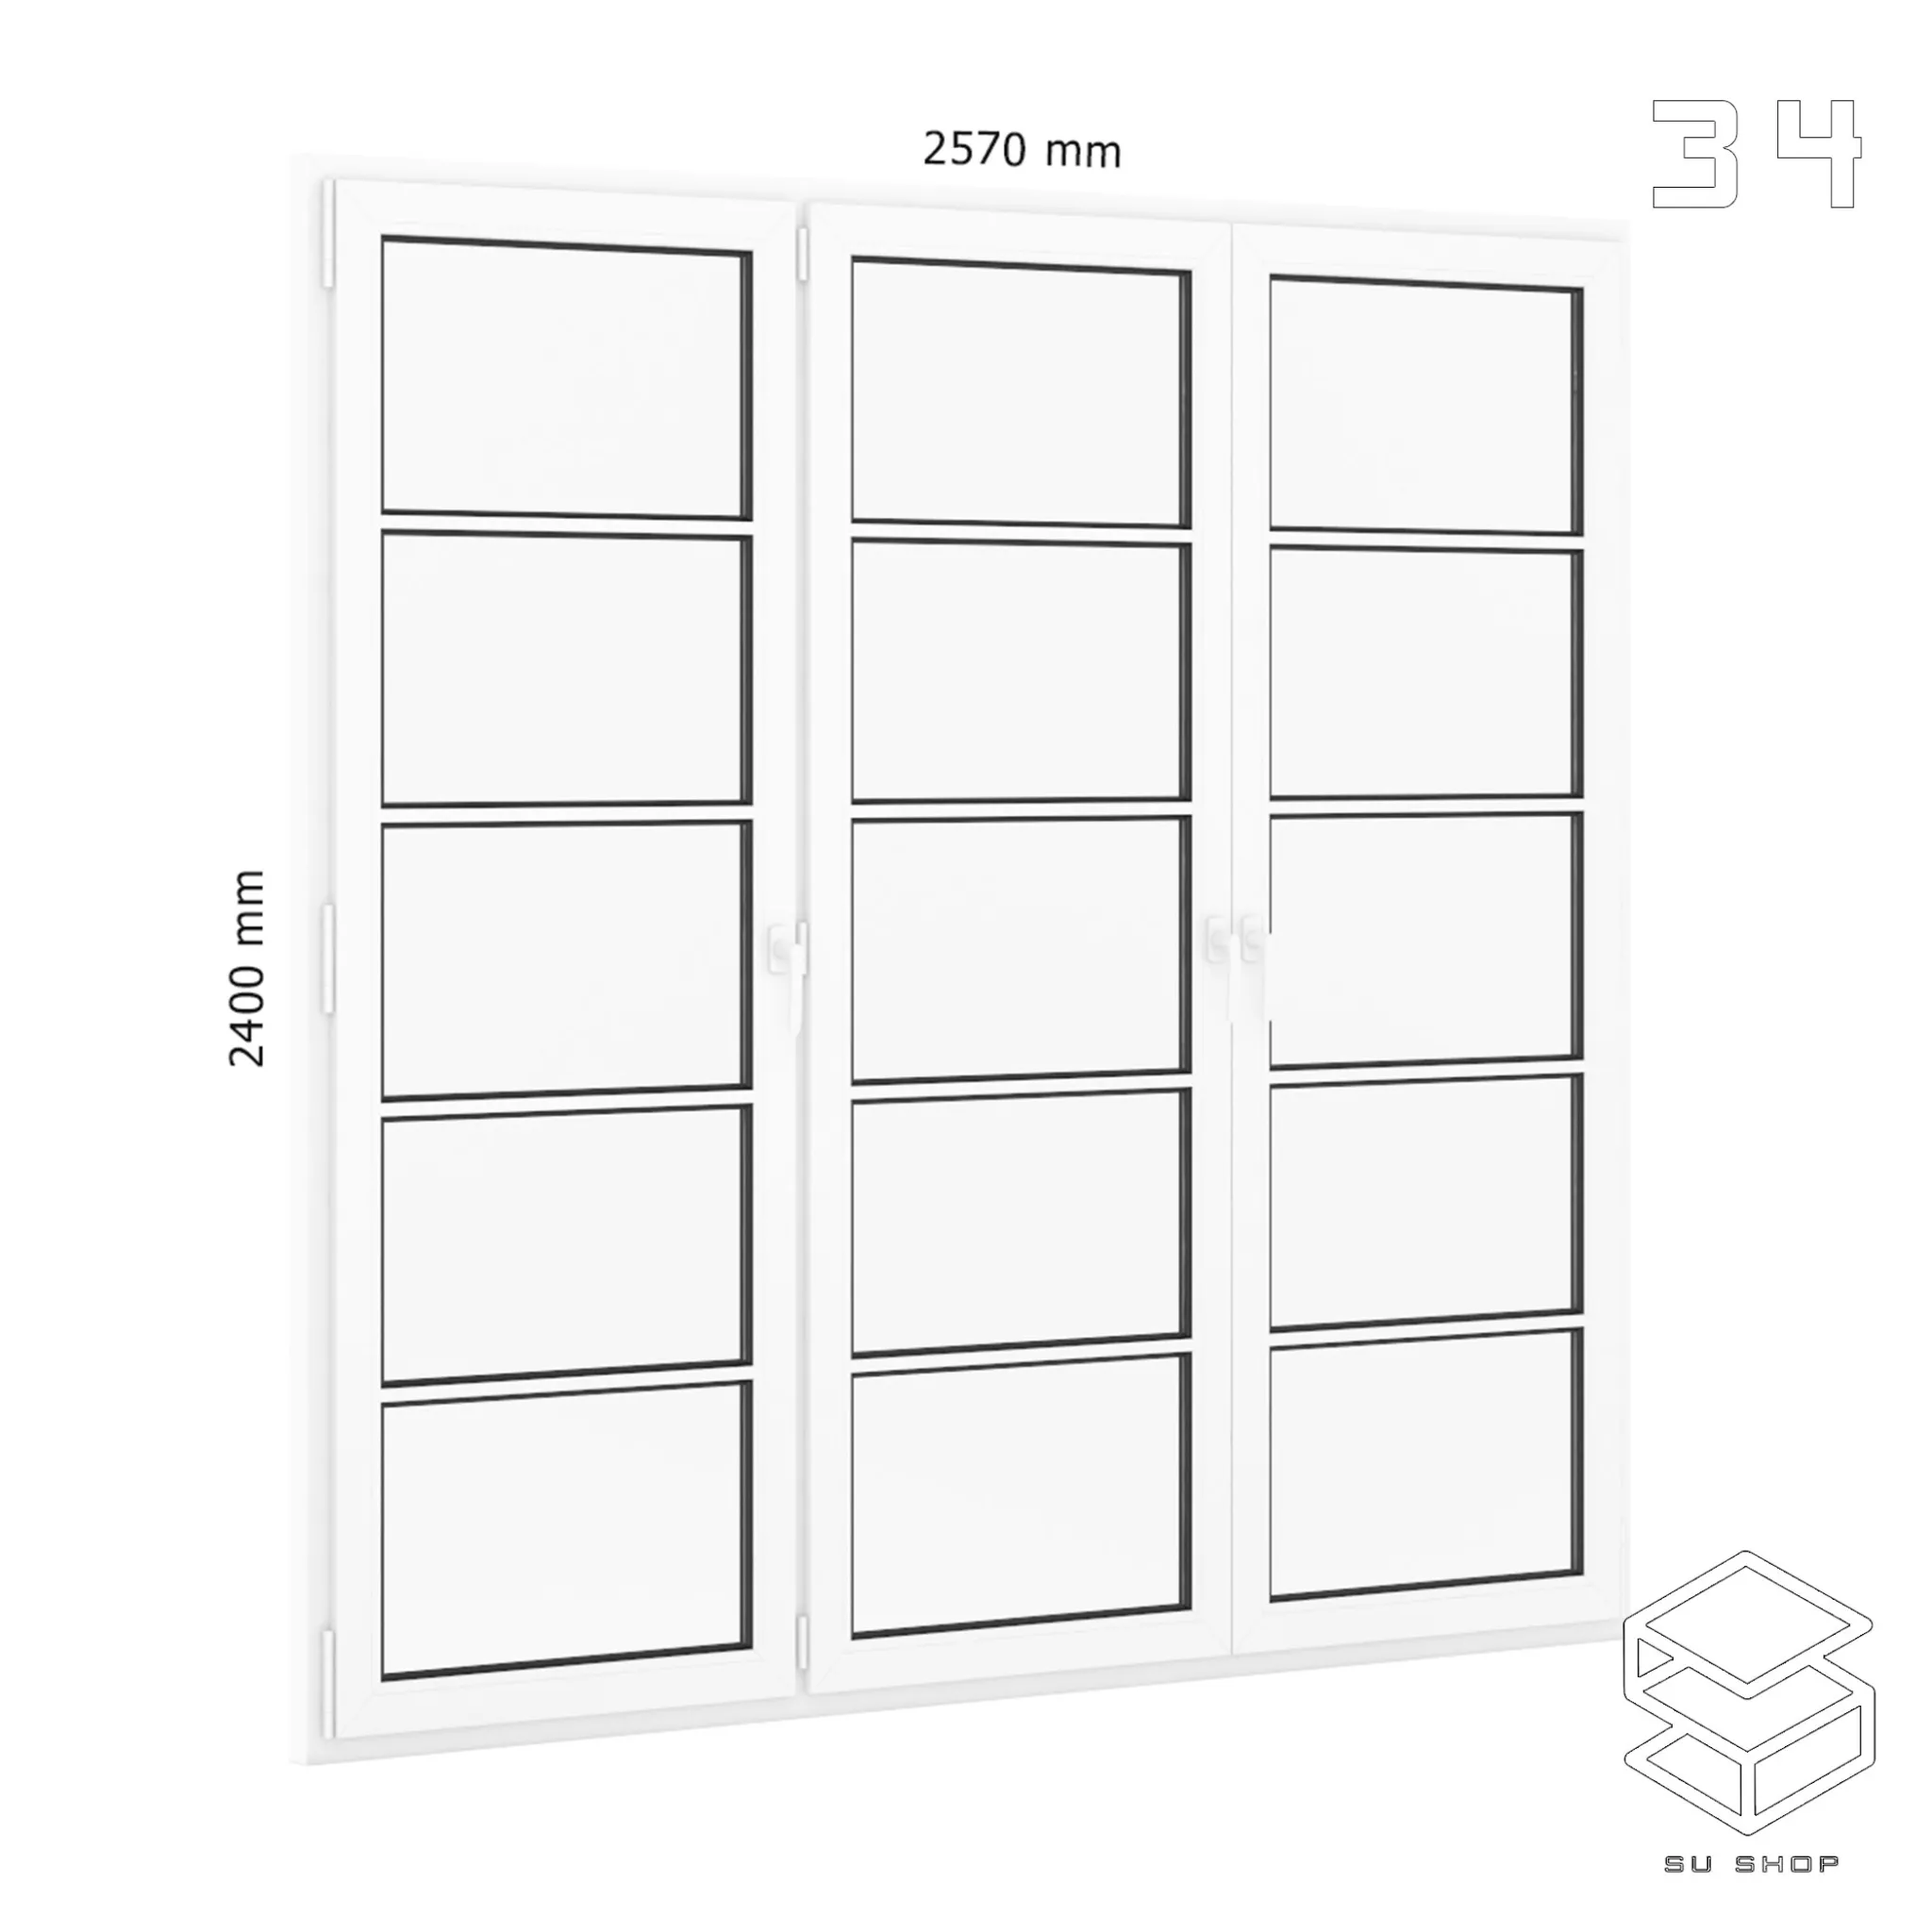 MODERN WINDOWS - SKETCHUP 3D MODEL - VRAY OR ENSCAPE - ID16775